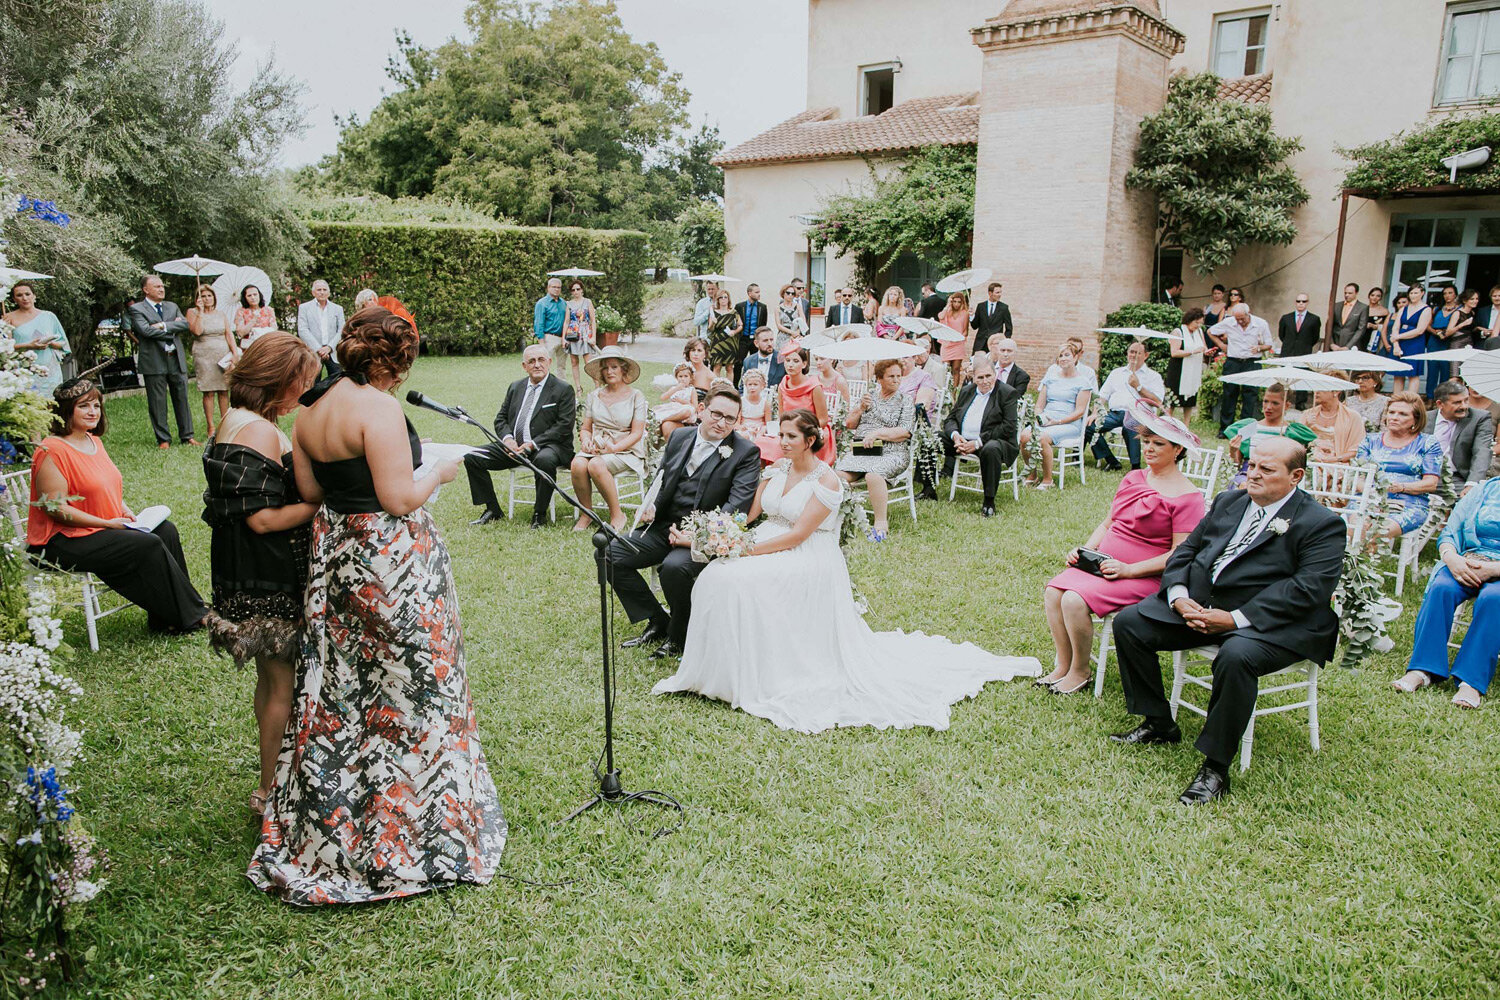 078-vilayvidal-fotografia-bodas-gandia-valencia-alicante-boda-Ana-Simon-Moli-Canyisset-LaFontdencarros.jpg